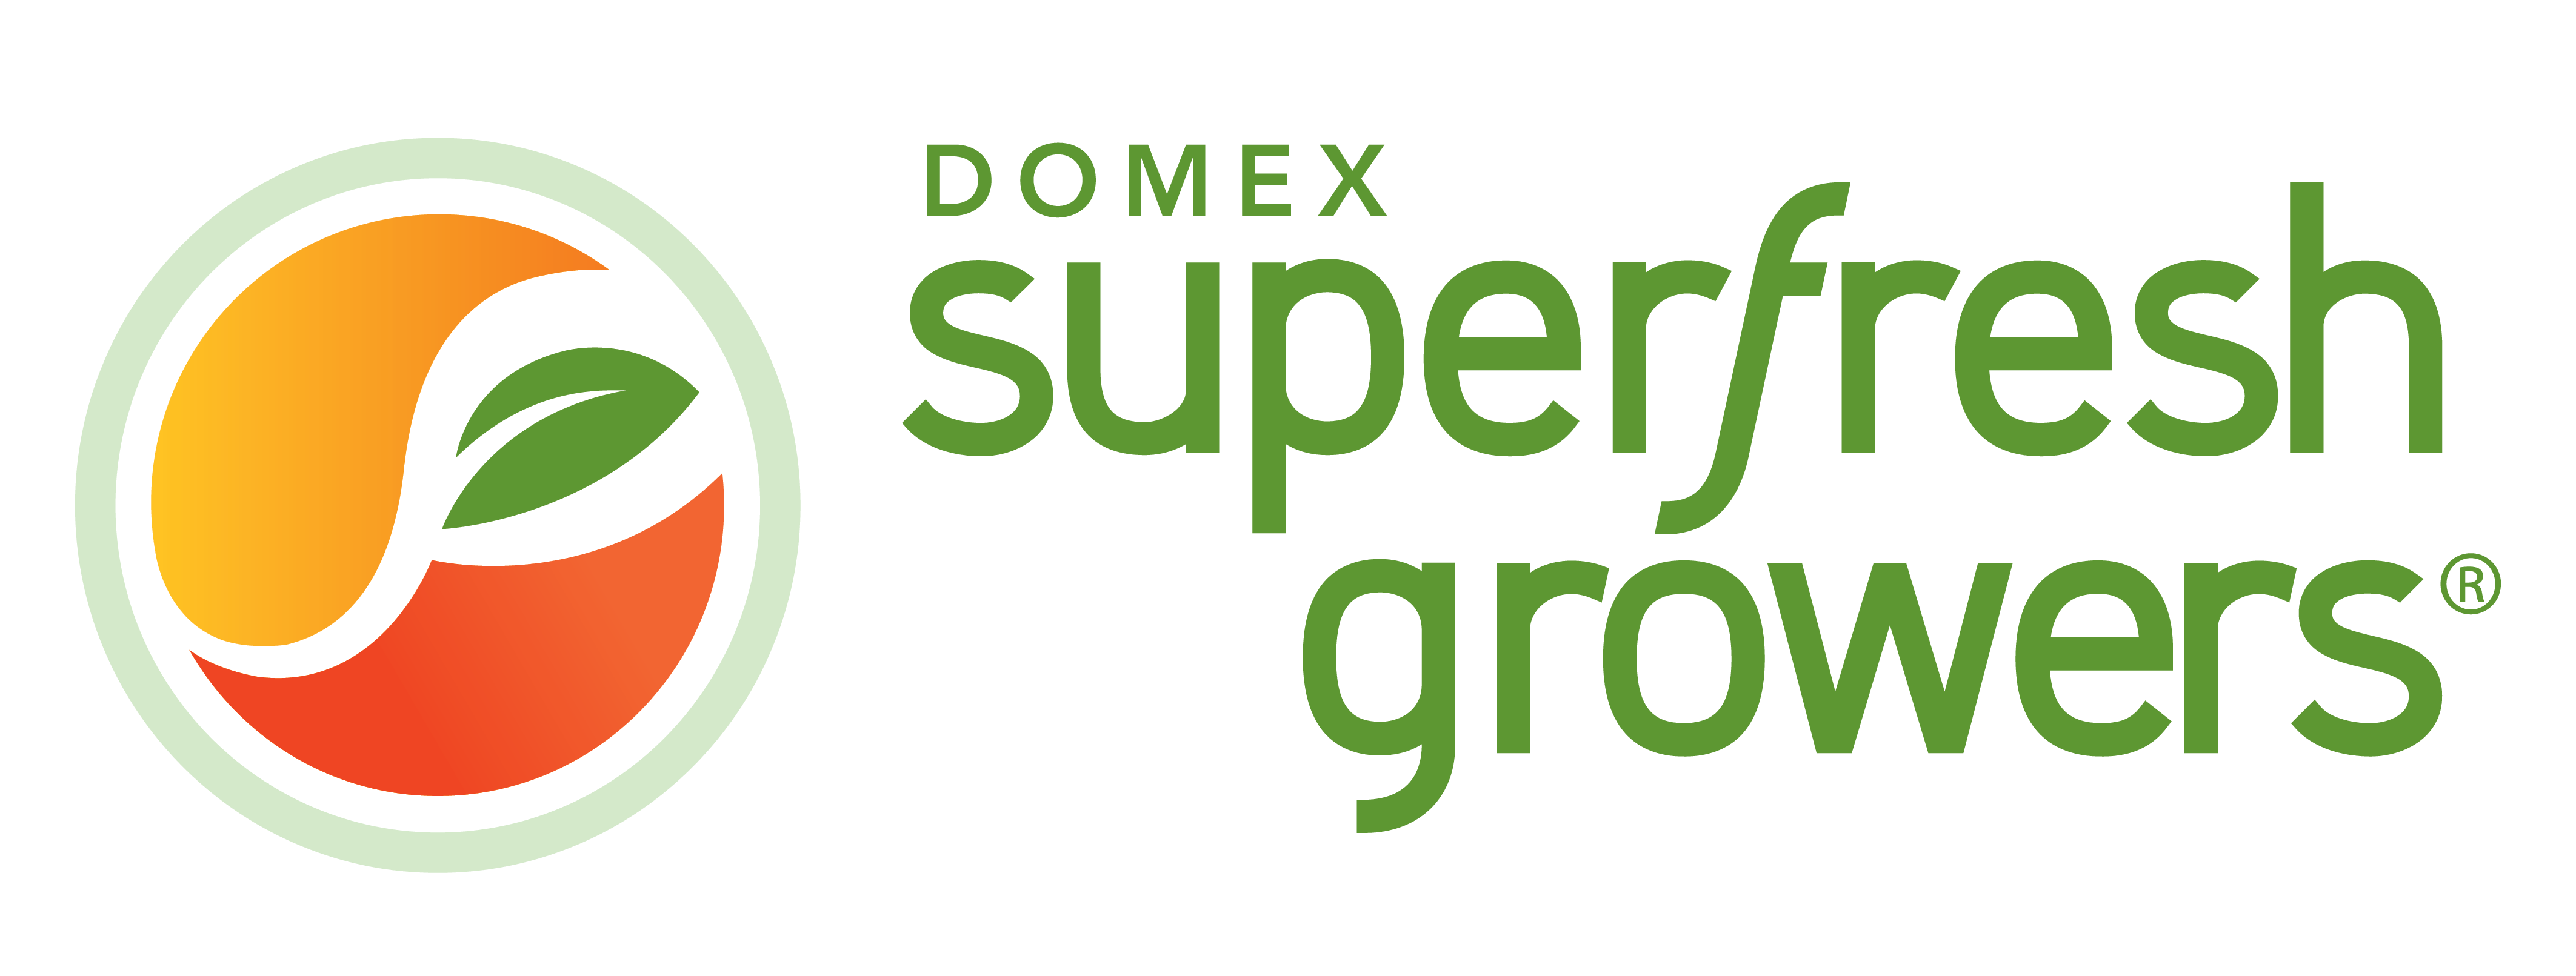 Domex Superfresh Growers logo